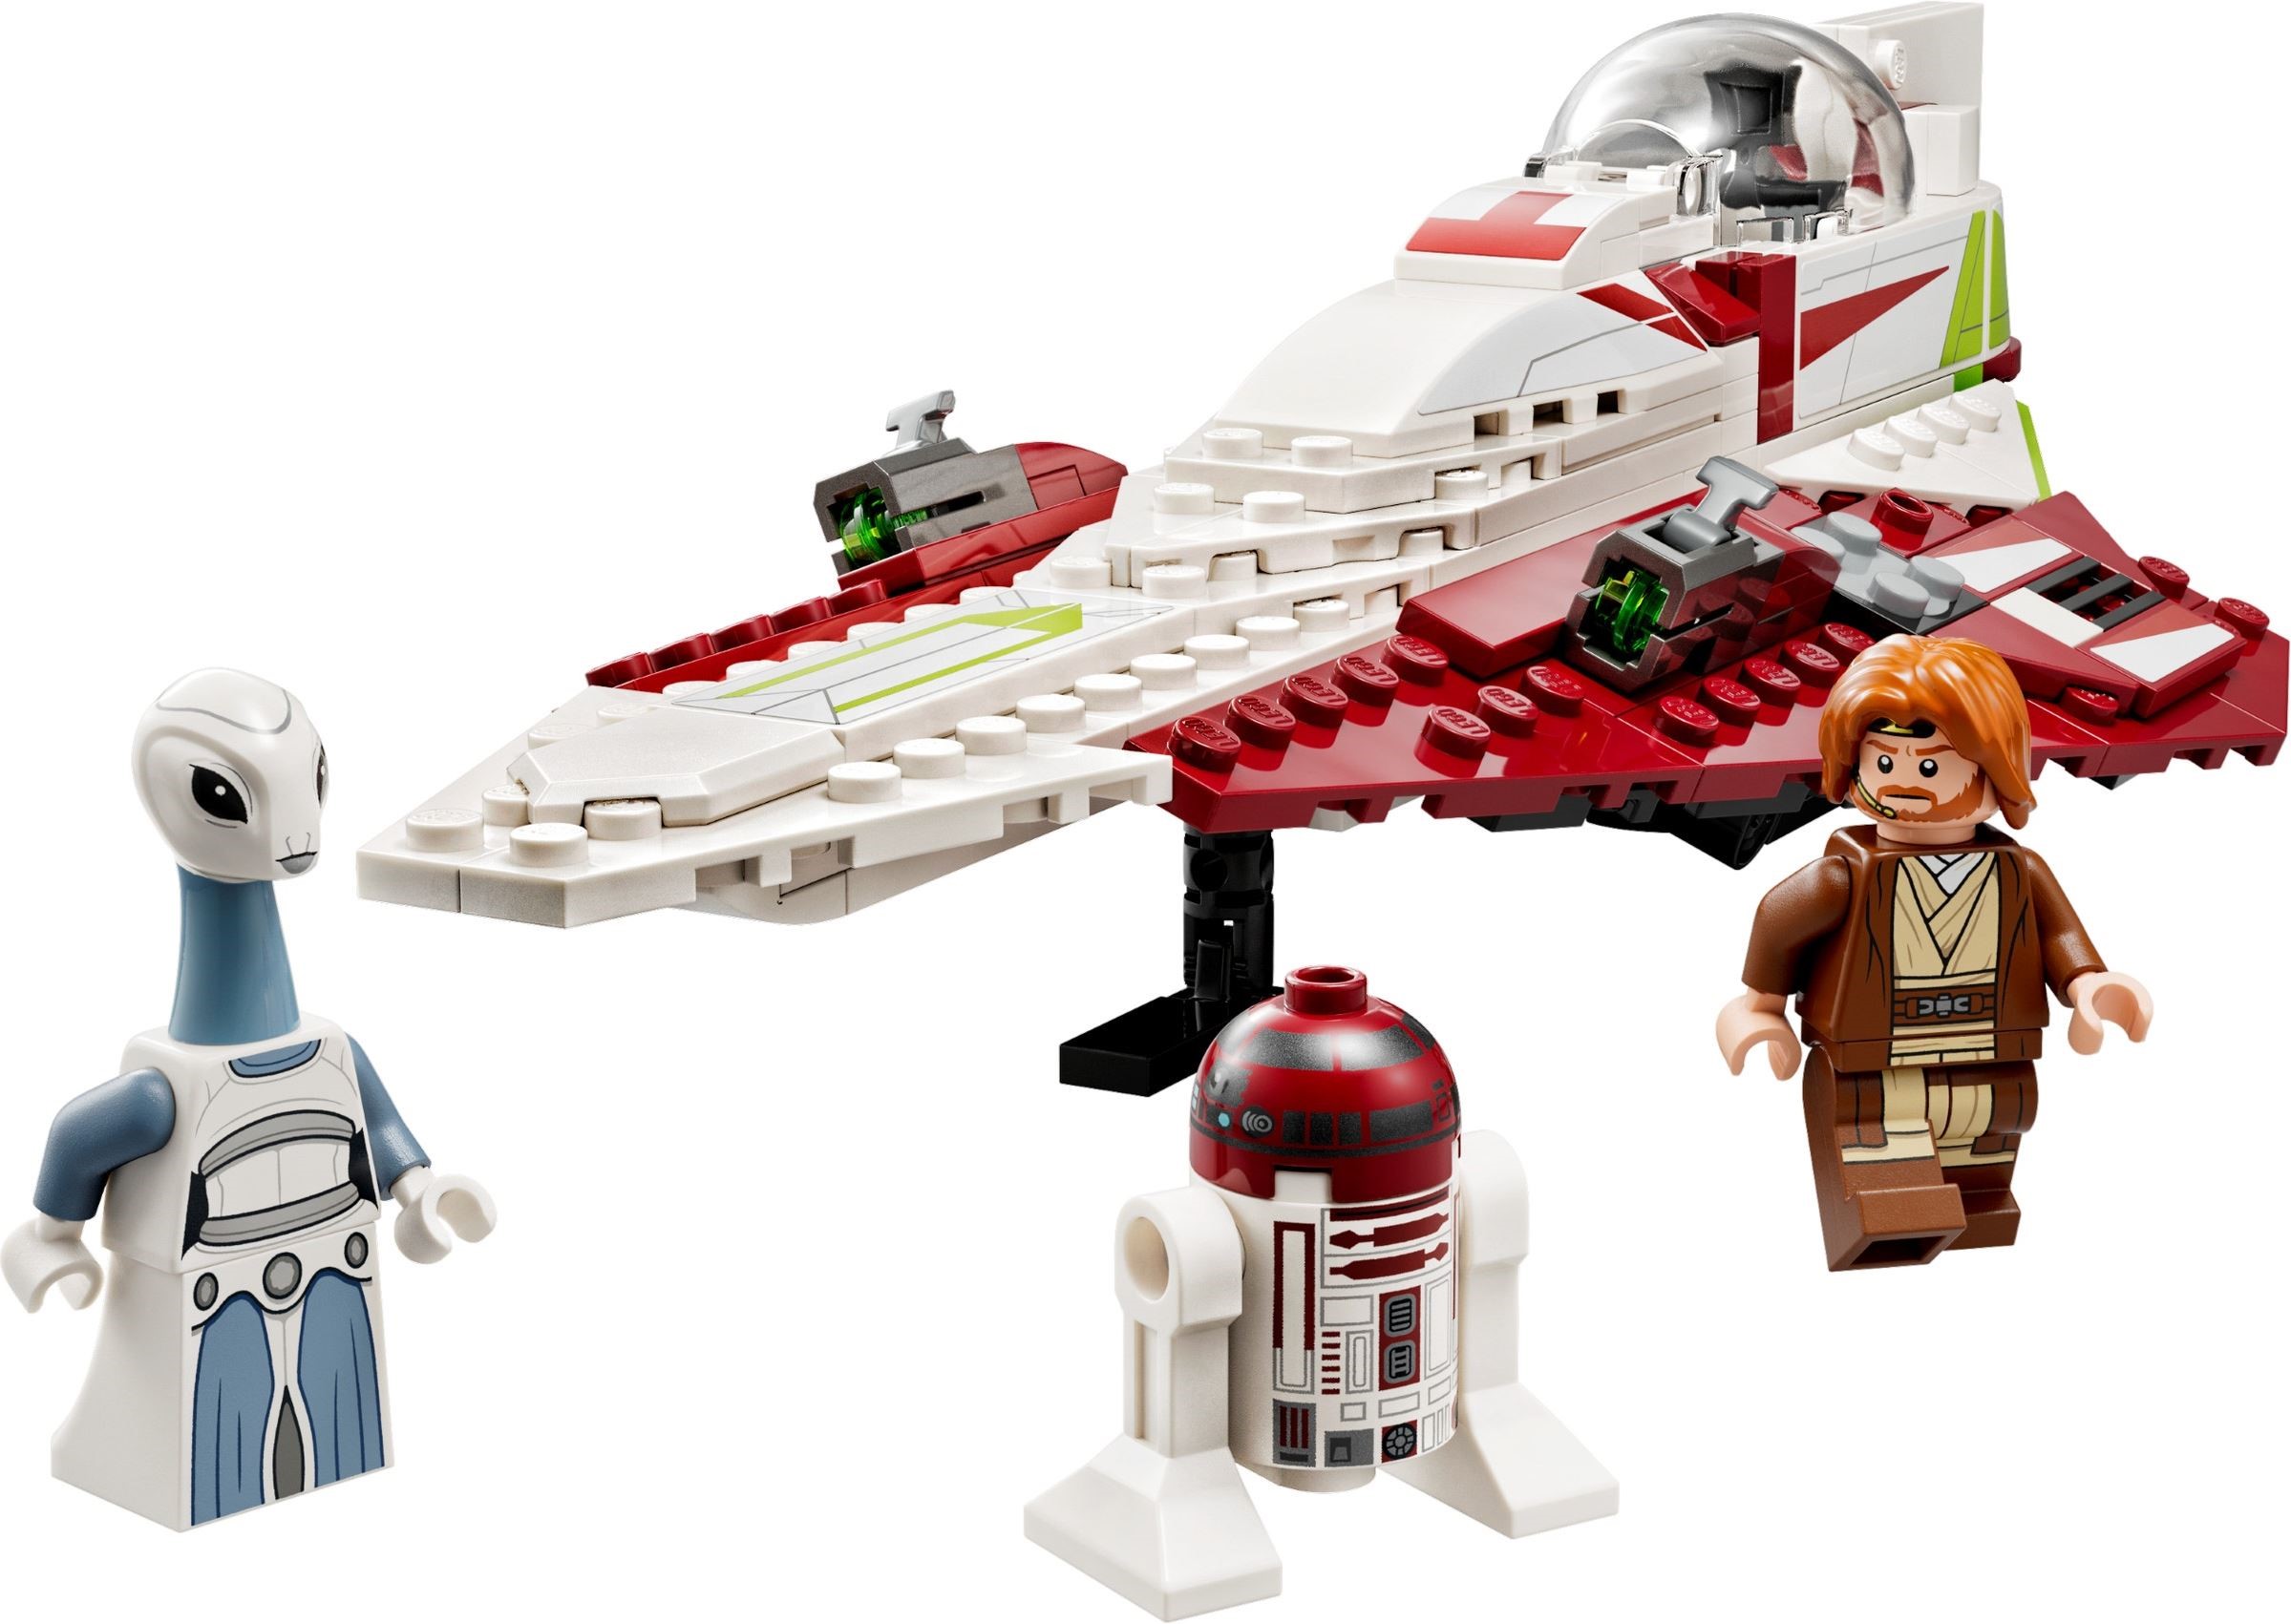 Two Star Wars sets unveiled! Brickset: LEGO set guide and database